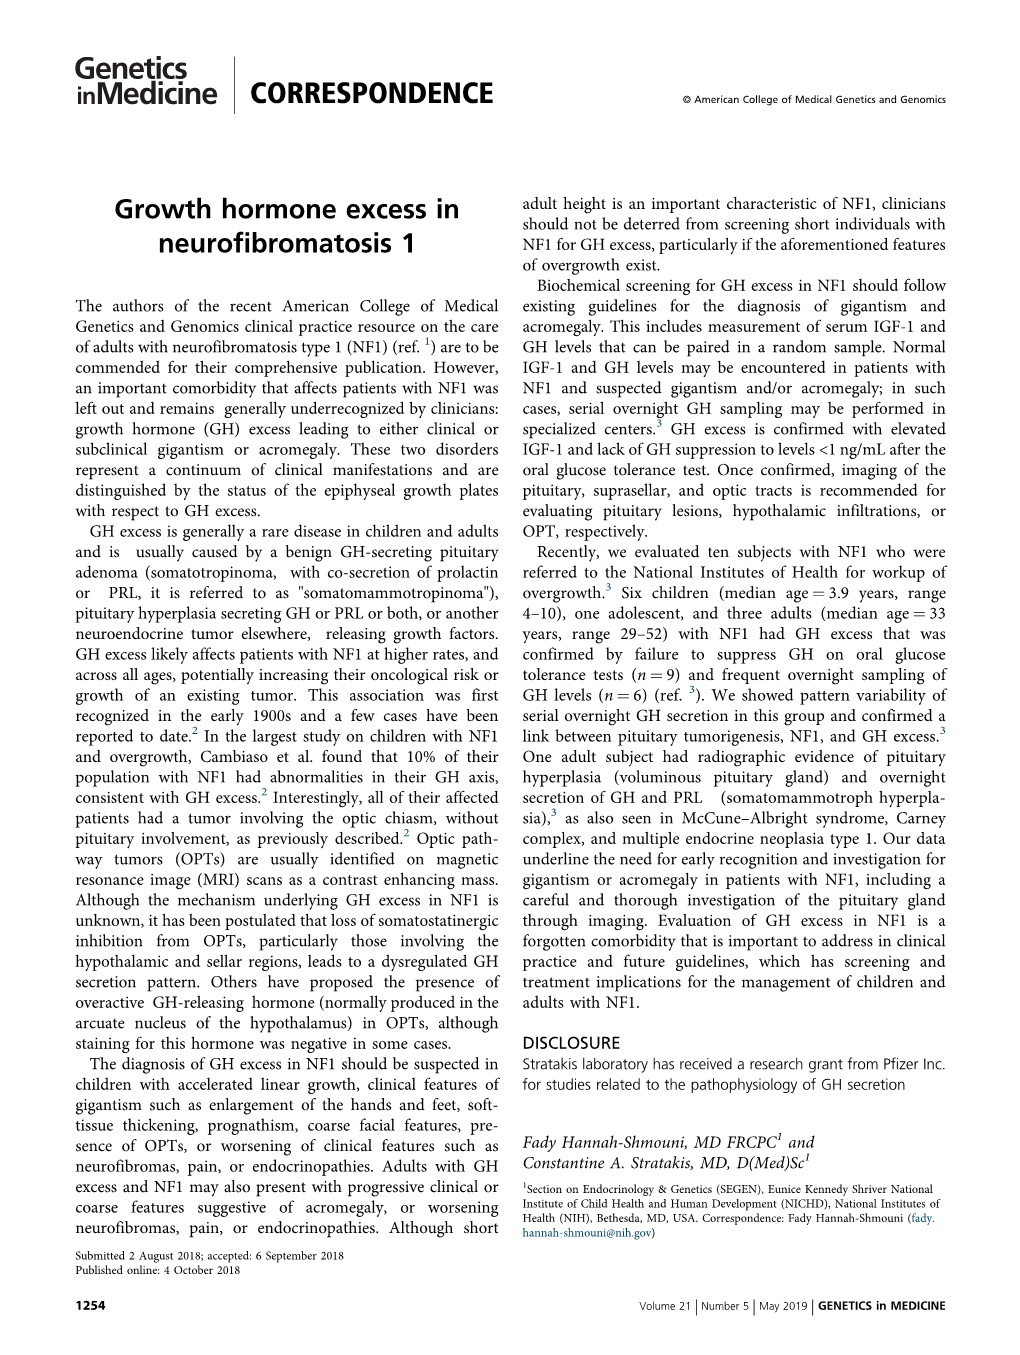 Growth Hormone Excess in Neurofibromatosis 1